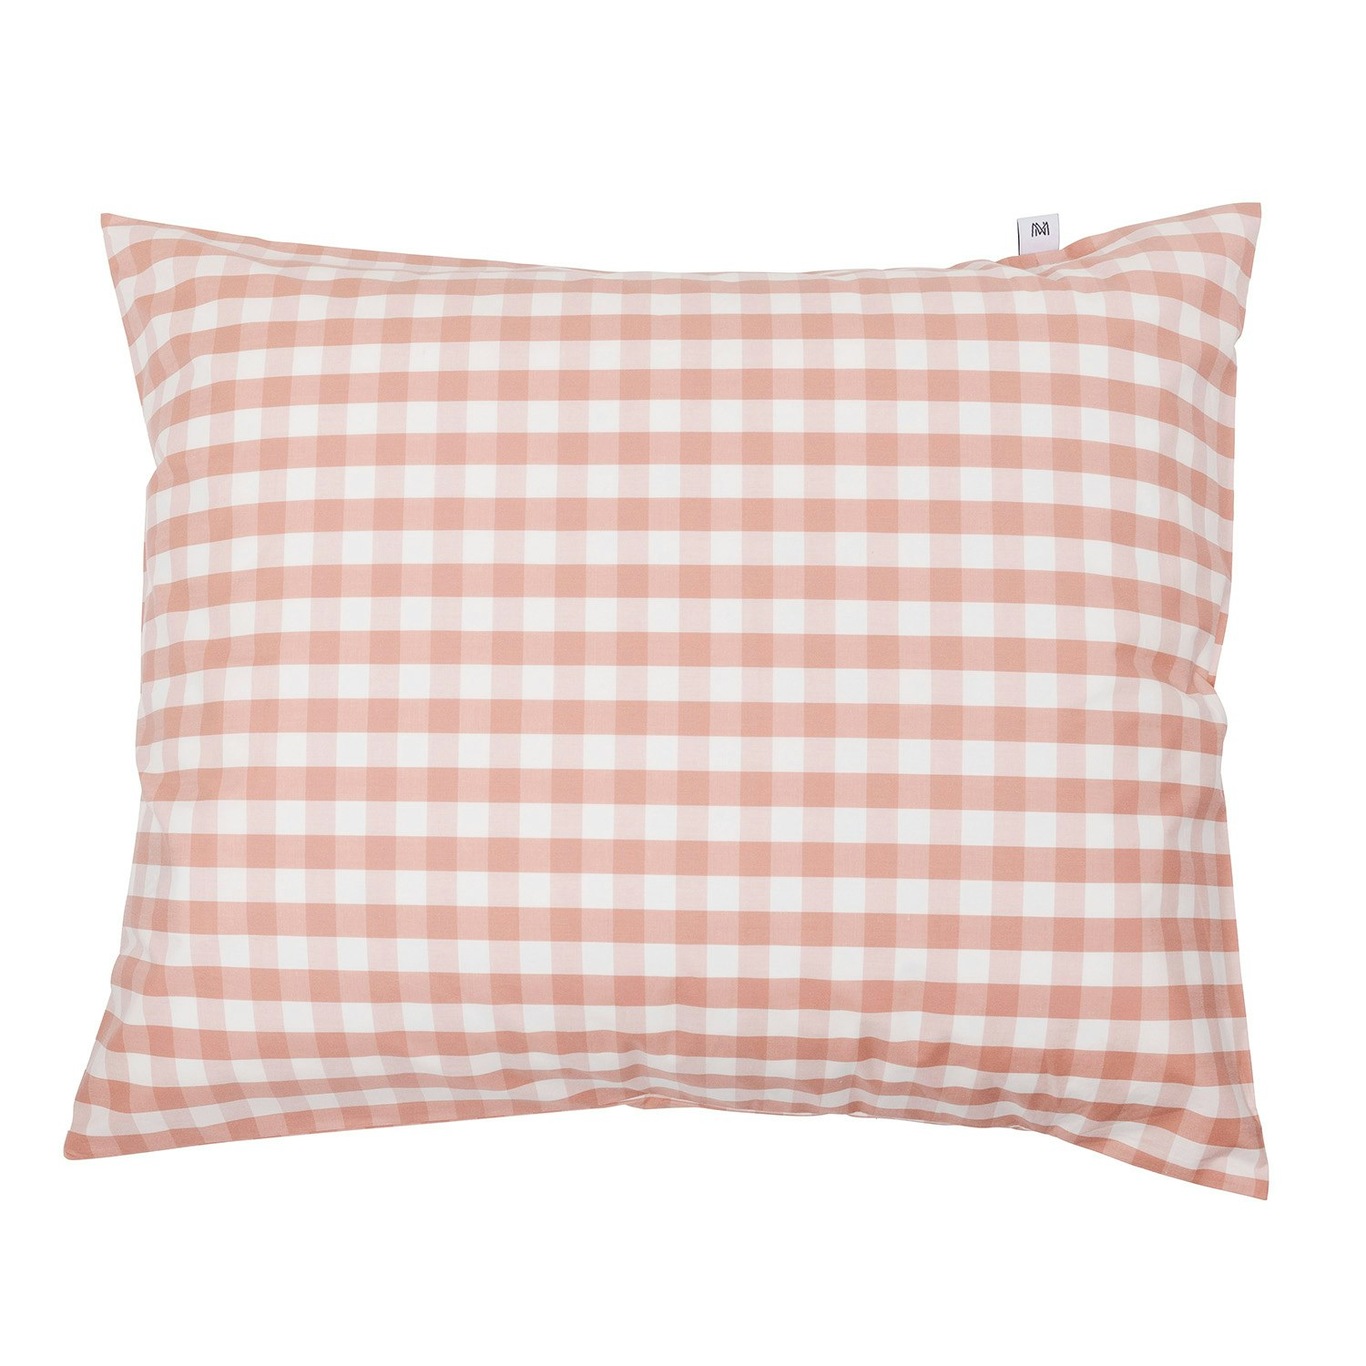 Casella Pillowcase 60x80 cm, Pink/Ivory